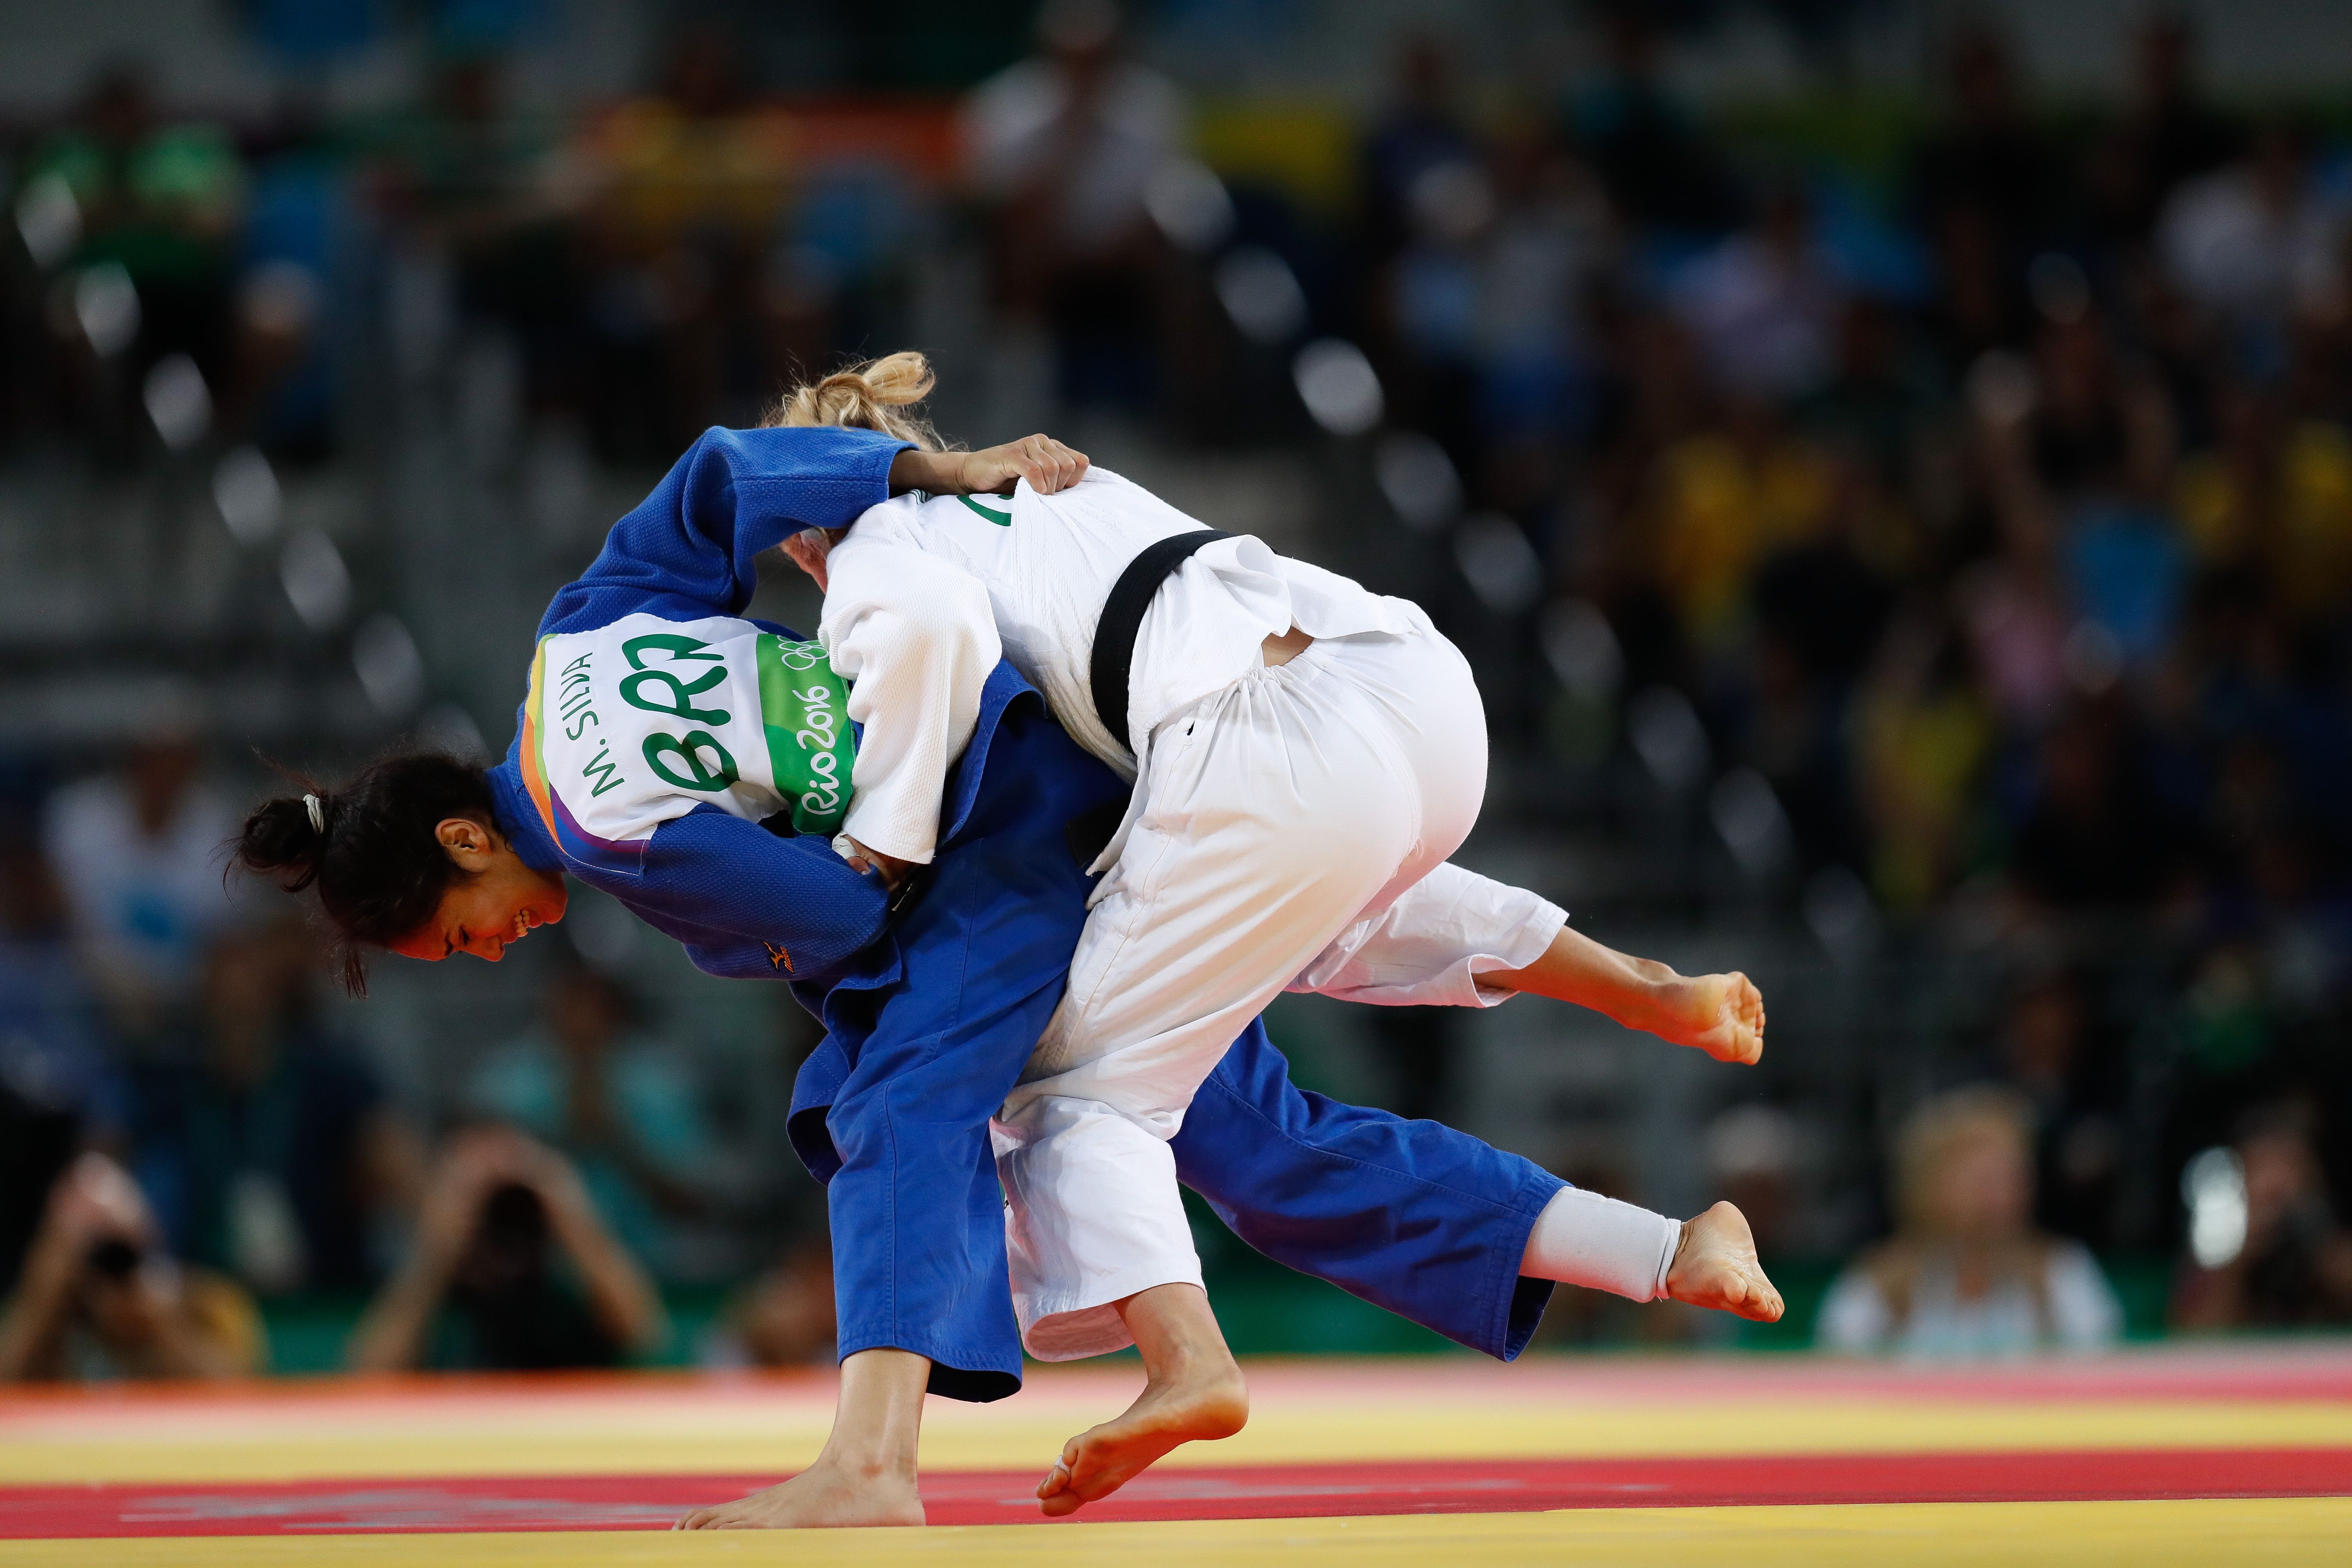 Rio 2016 Judo 1036111-090816judo01758.jpg.